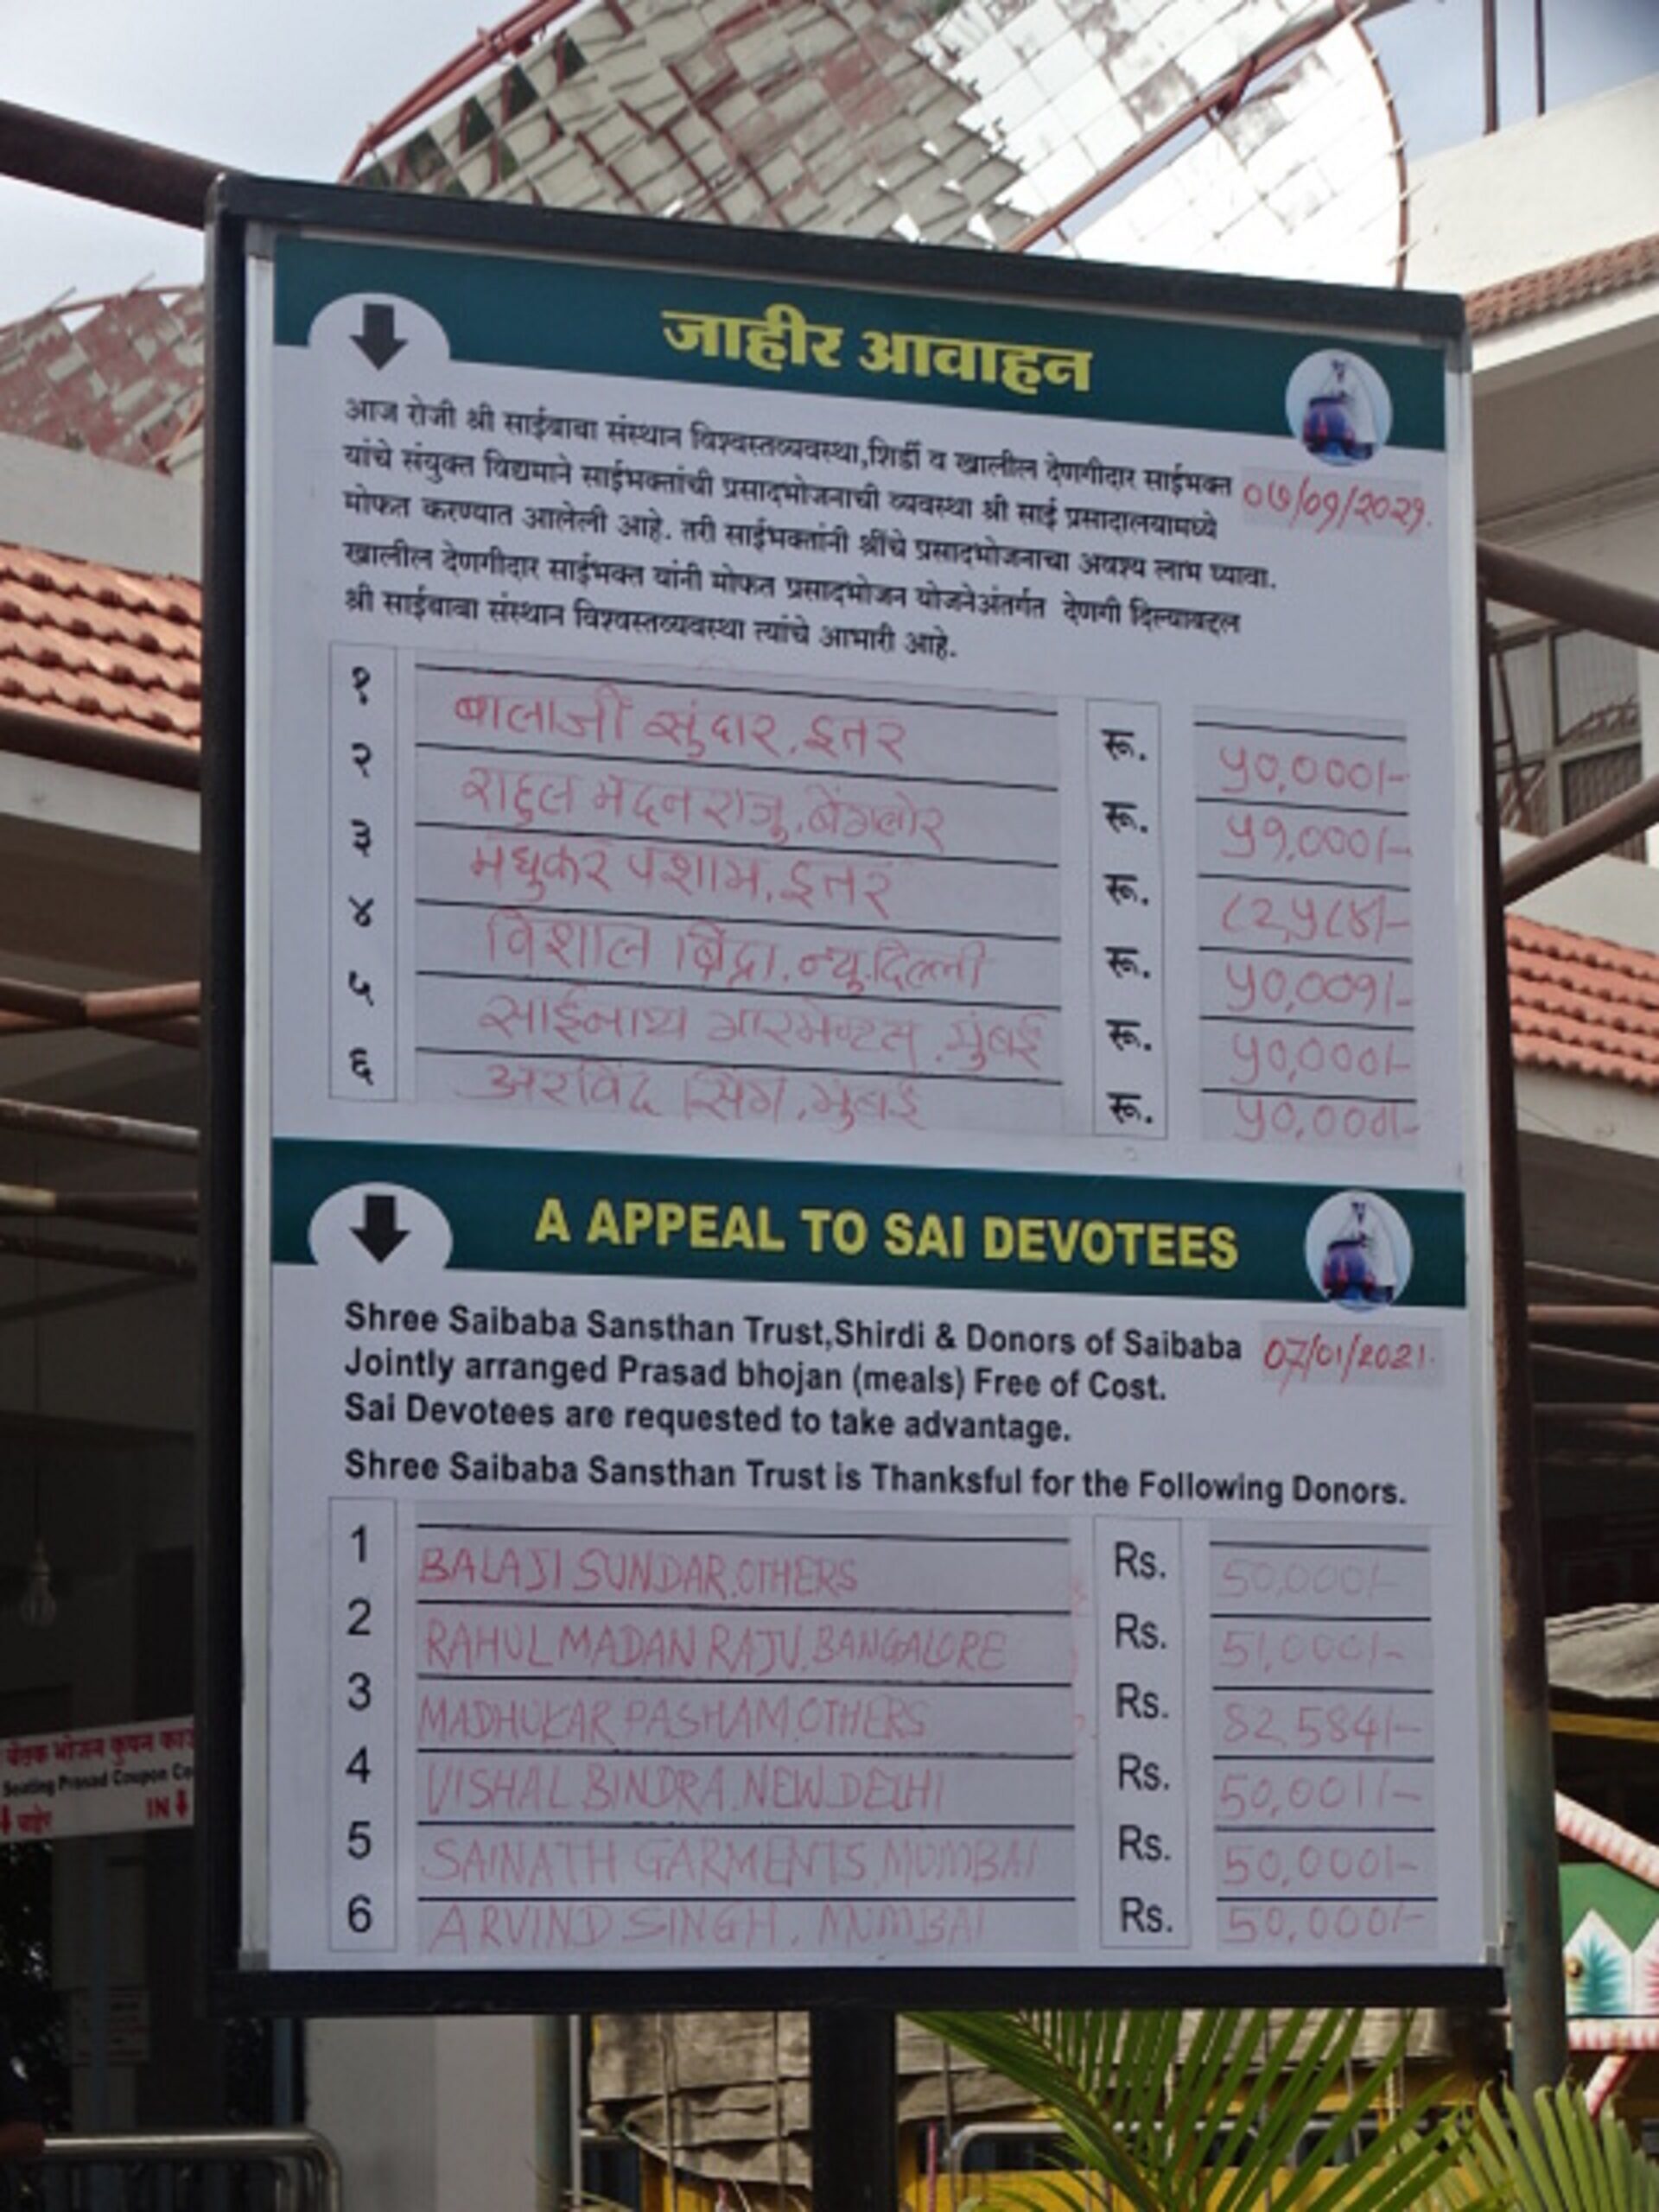 Name of The Donors for Prasad (free meals) Displayed at Shree Sai Prasadalay